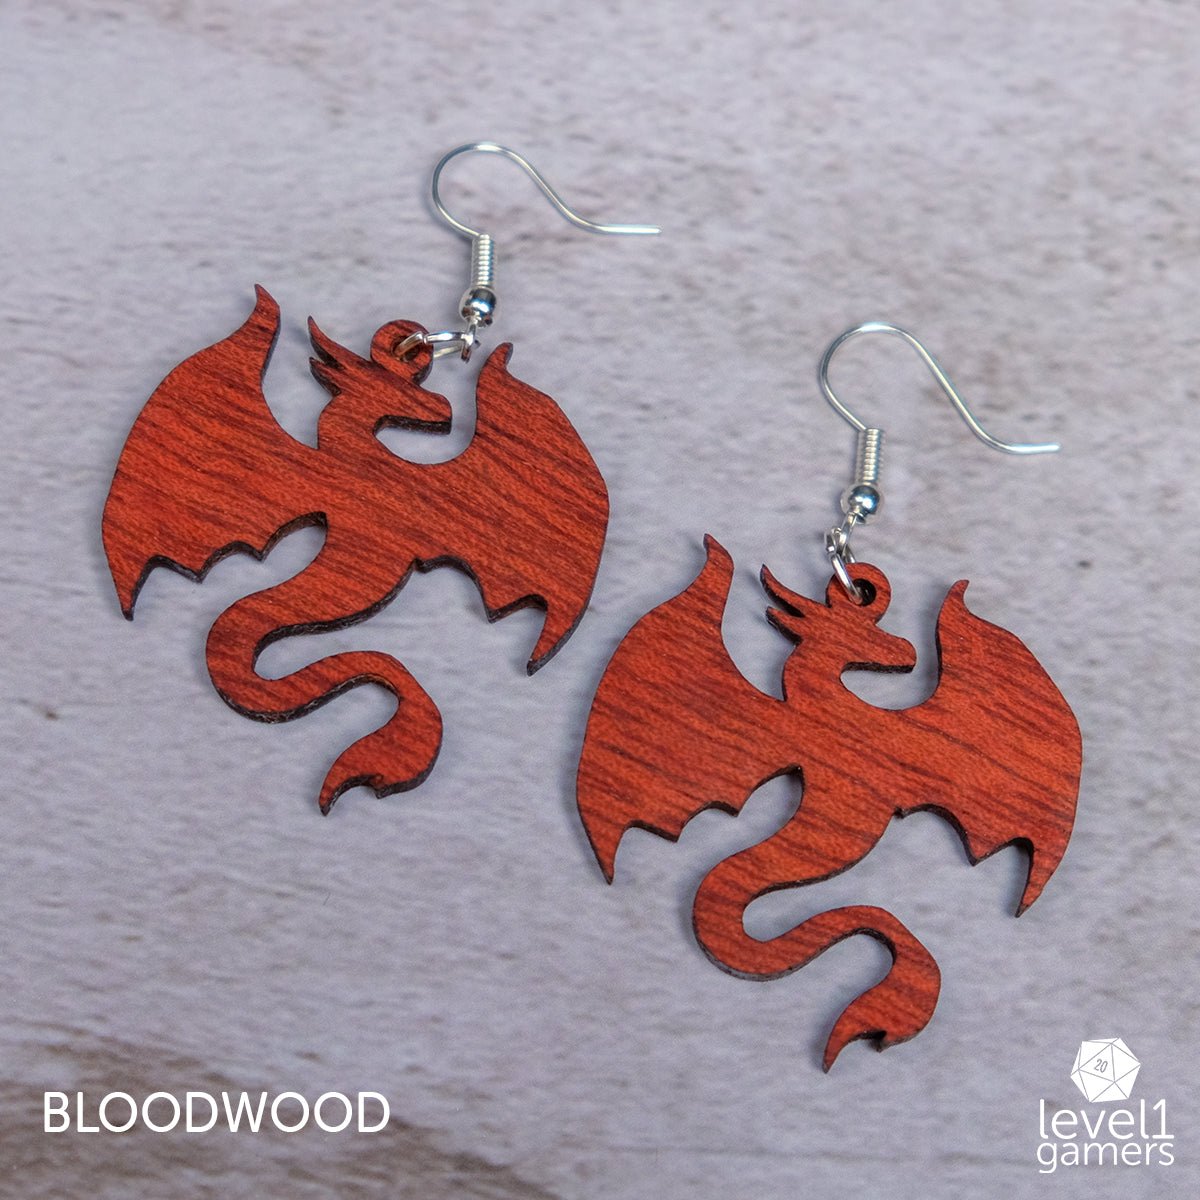 Dragon Wood Earrings  Level 1 Gamers Pendant Bloodwood 